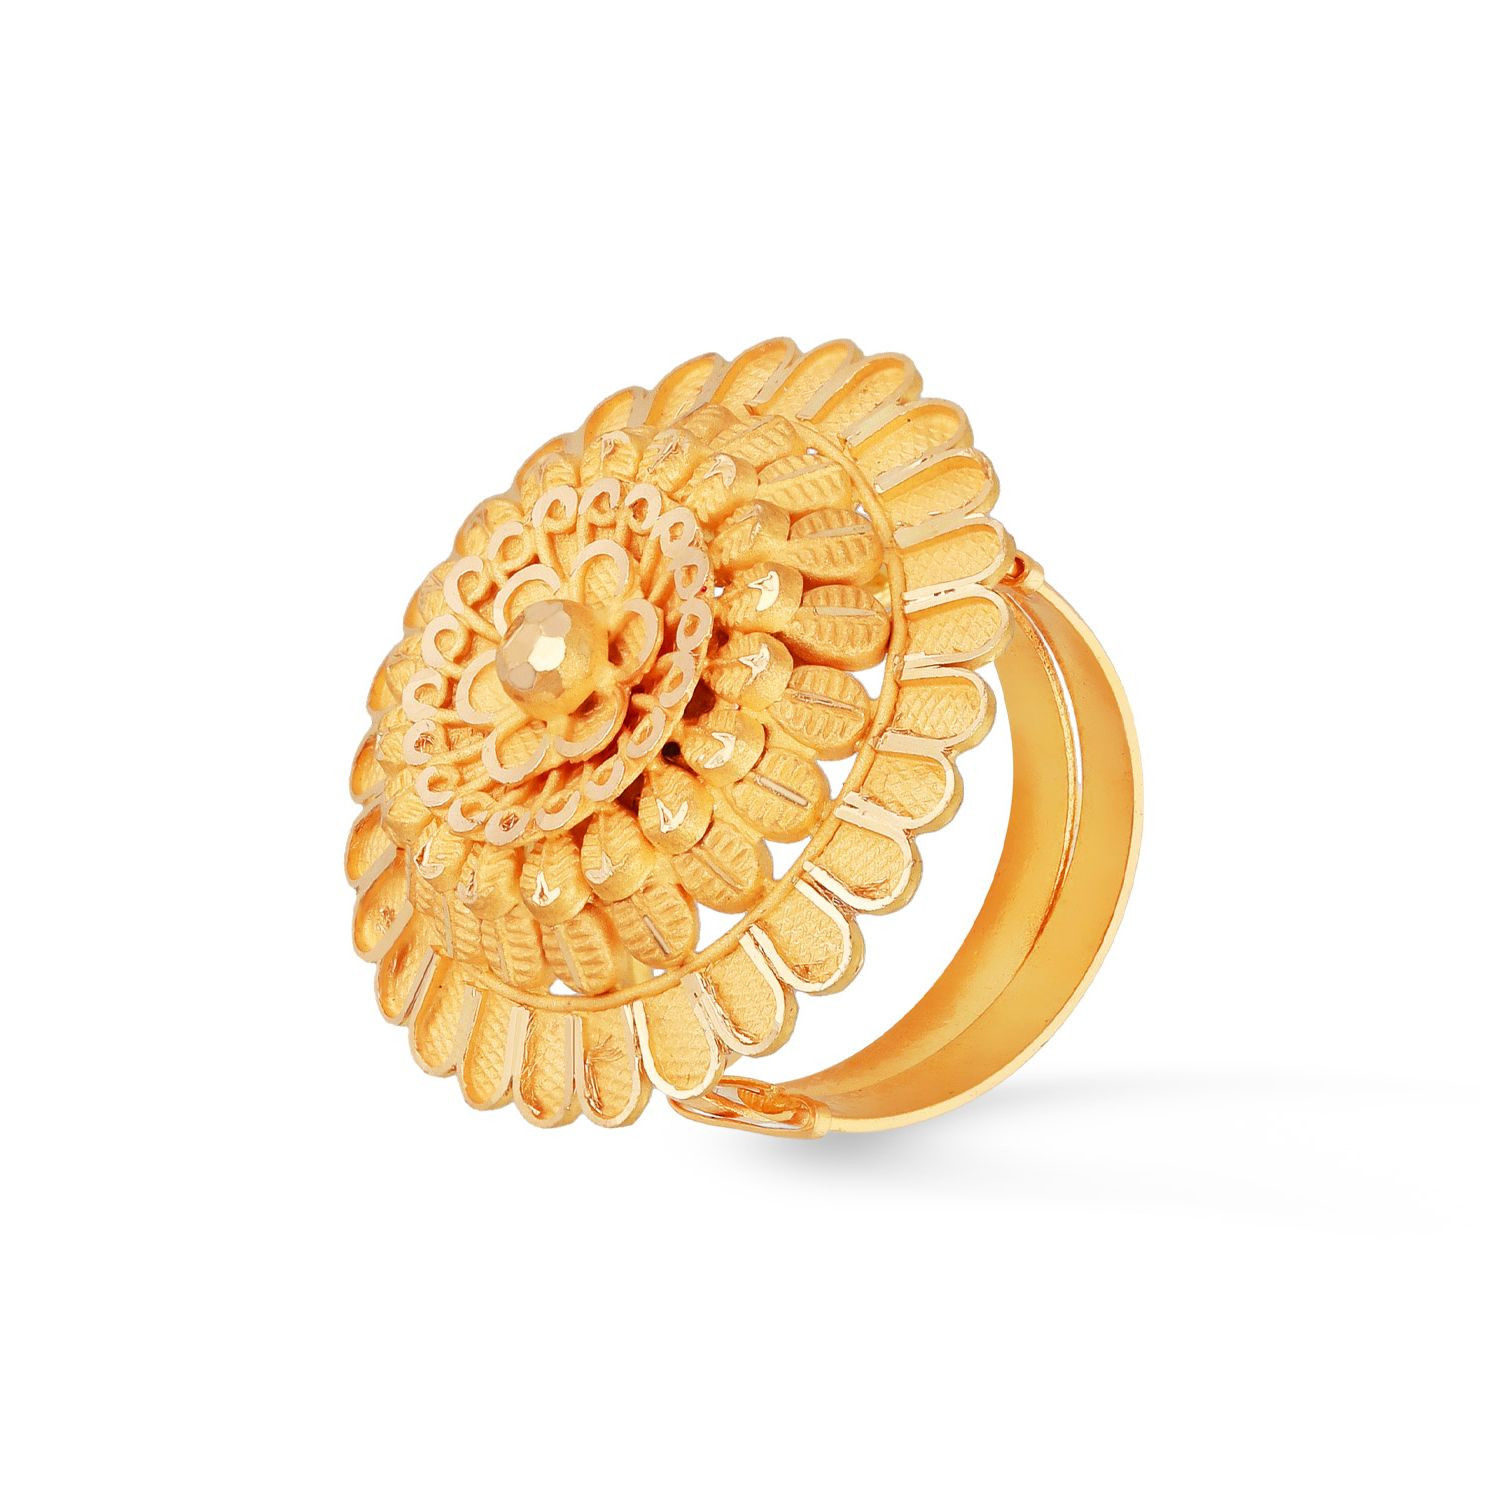 Malabar Gold & Diamonds 22k (916) Yellow Gold Ring for Women : Amazon.in:  Fashion